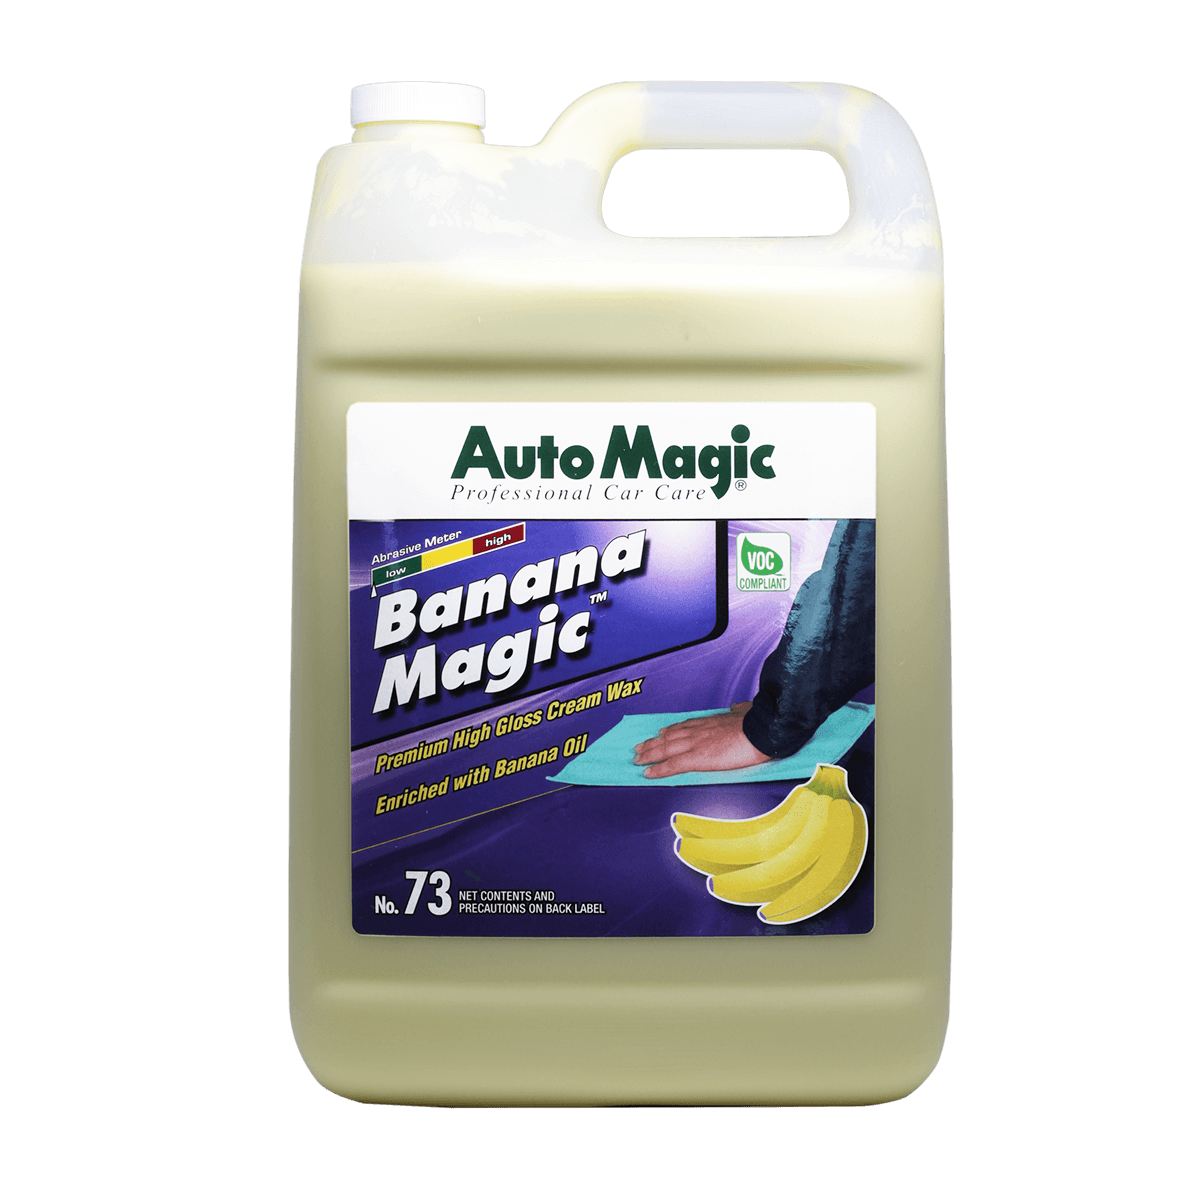 Auto Magic Banana Magic - Xpert Cleaning